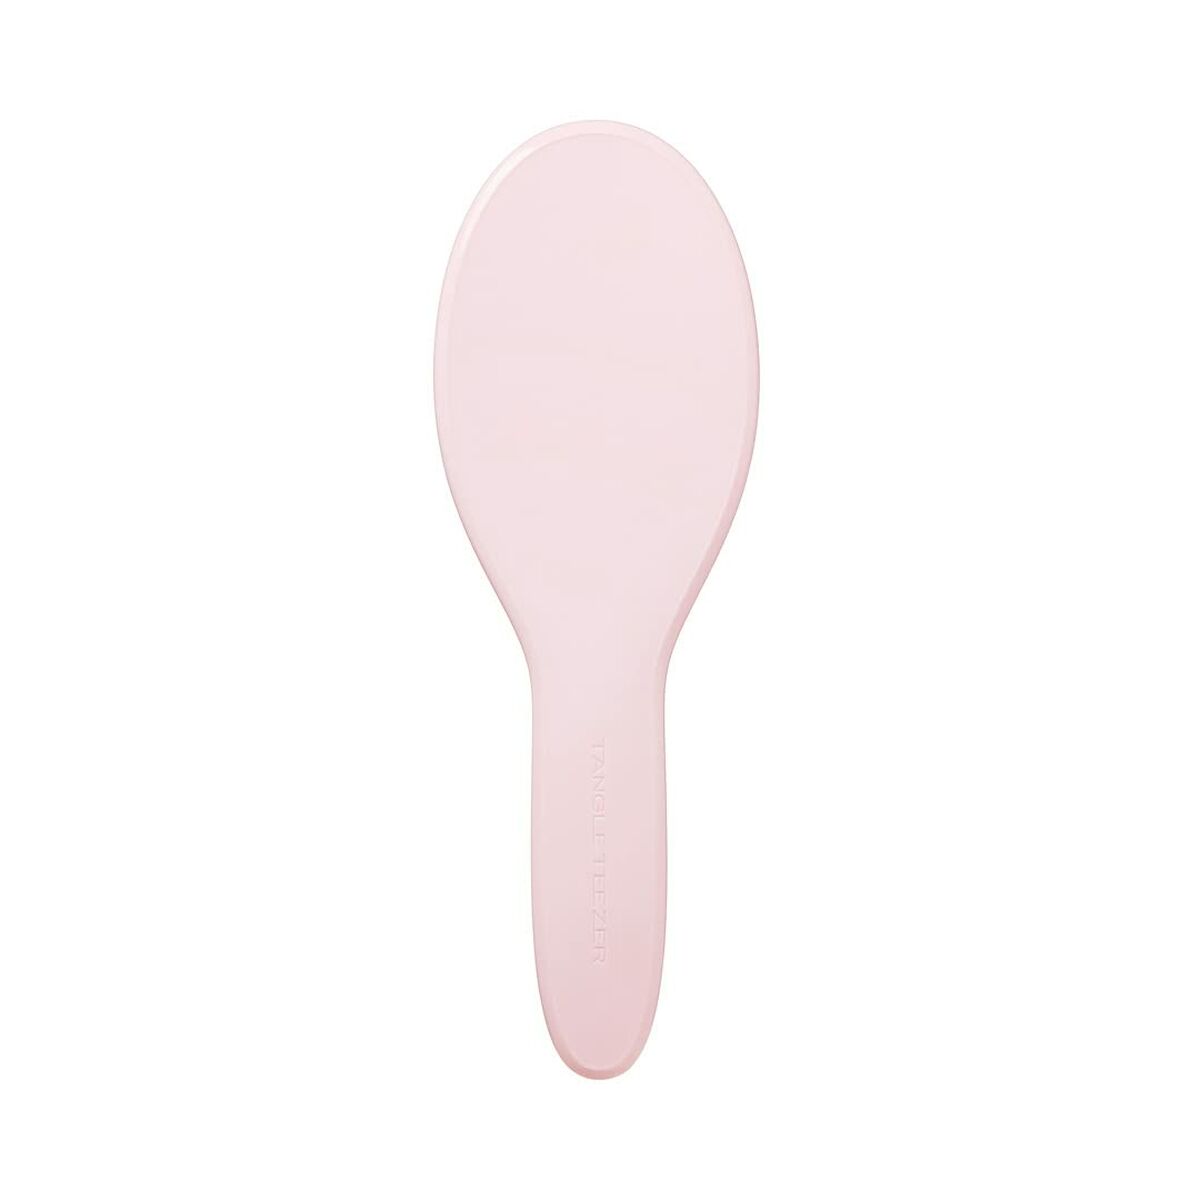 Brush Tangle Teezer The Ultimate Styler Millenial Pink